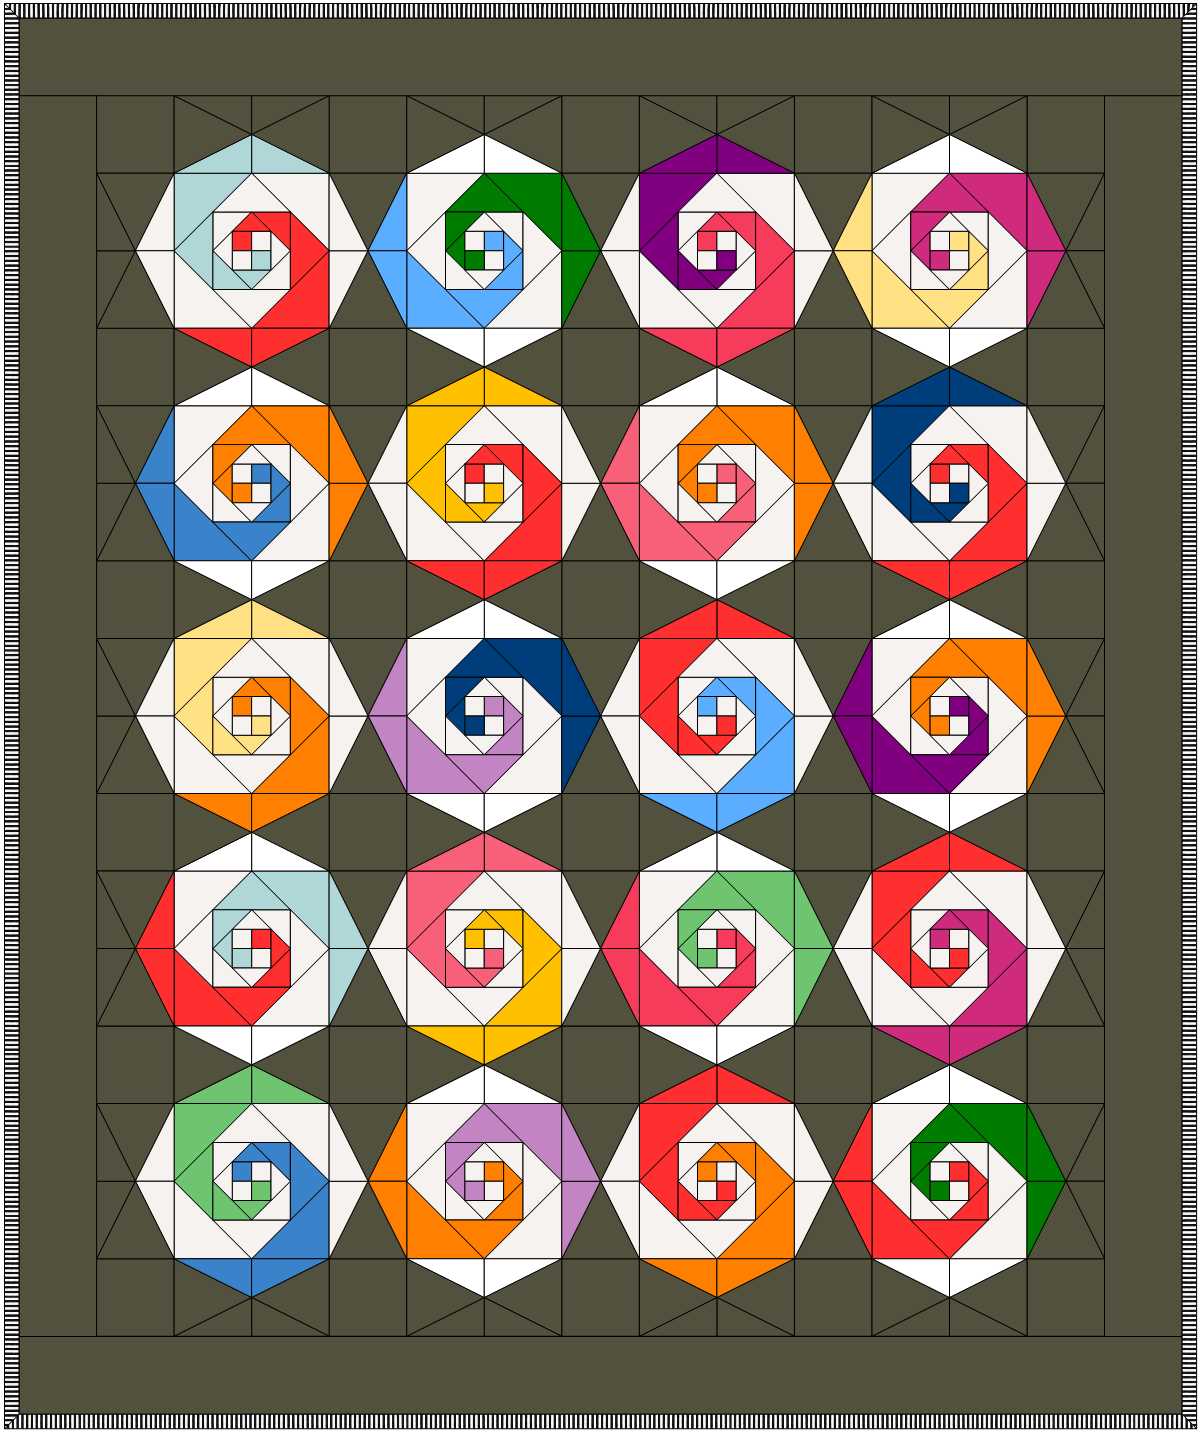 Final Swirl Pattern Layout